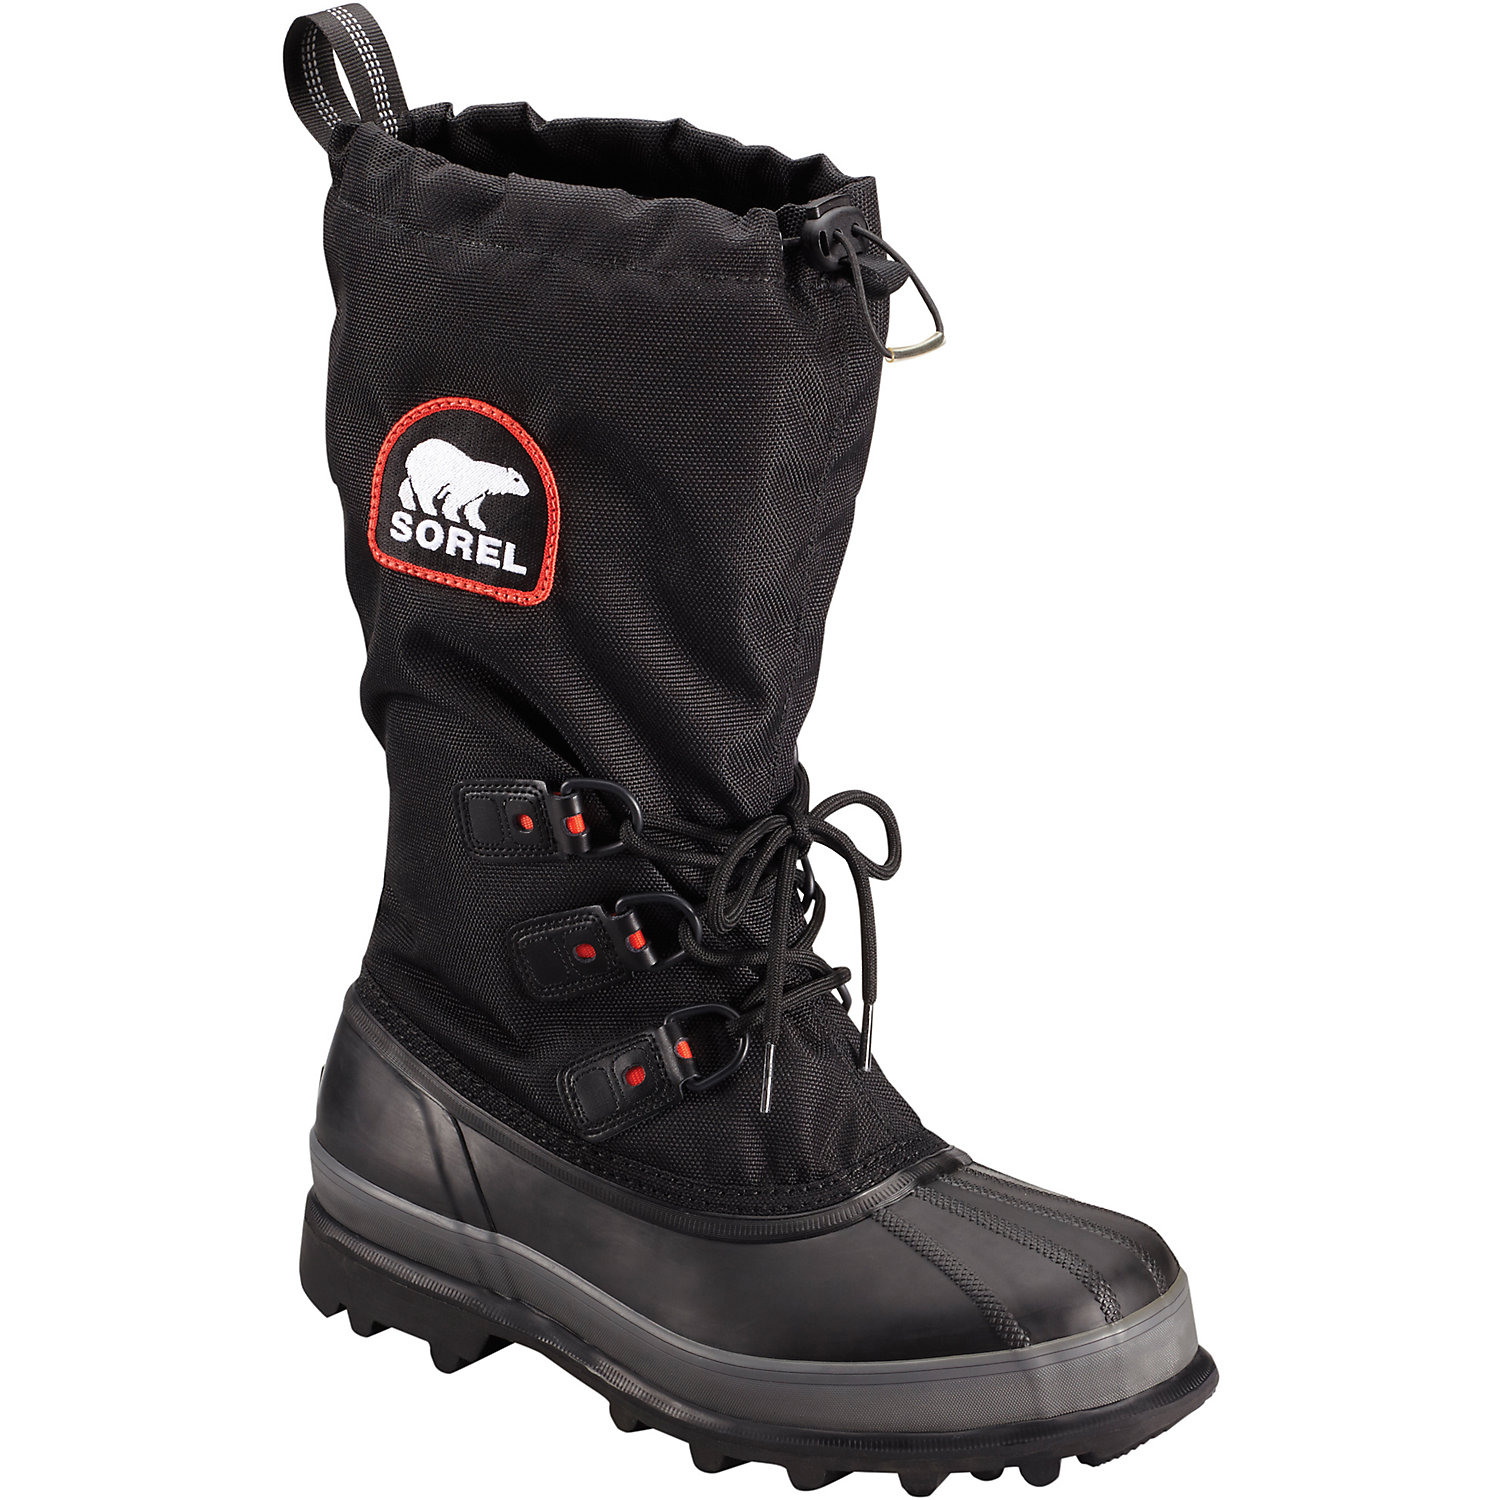 Sorel Men's Bear Extreme Snow Boot